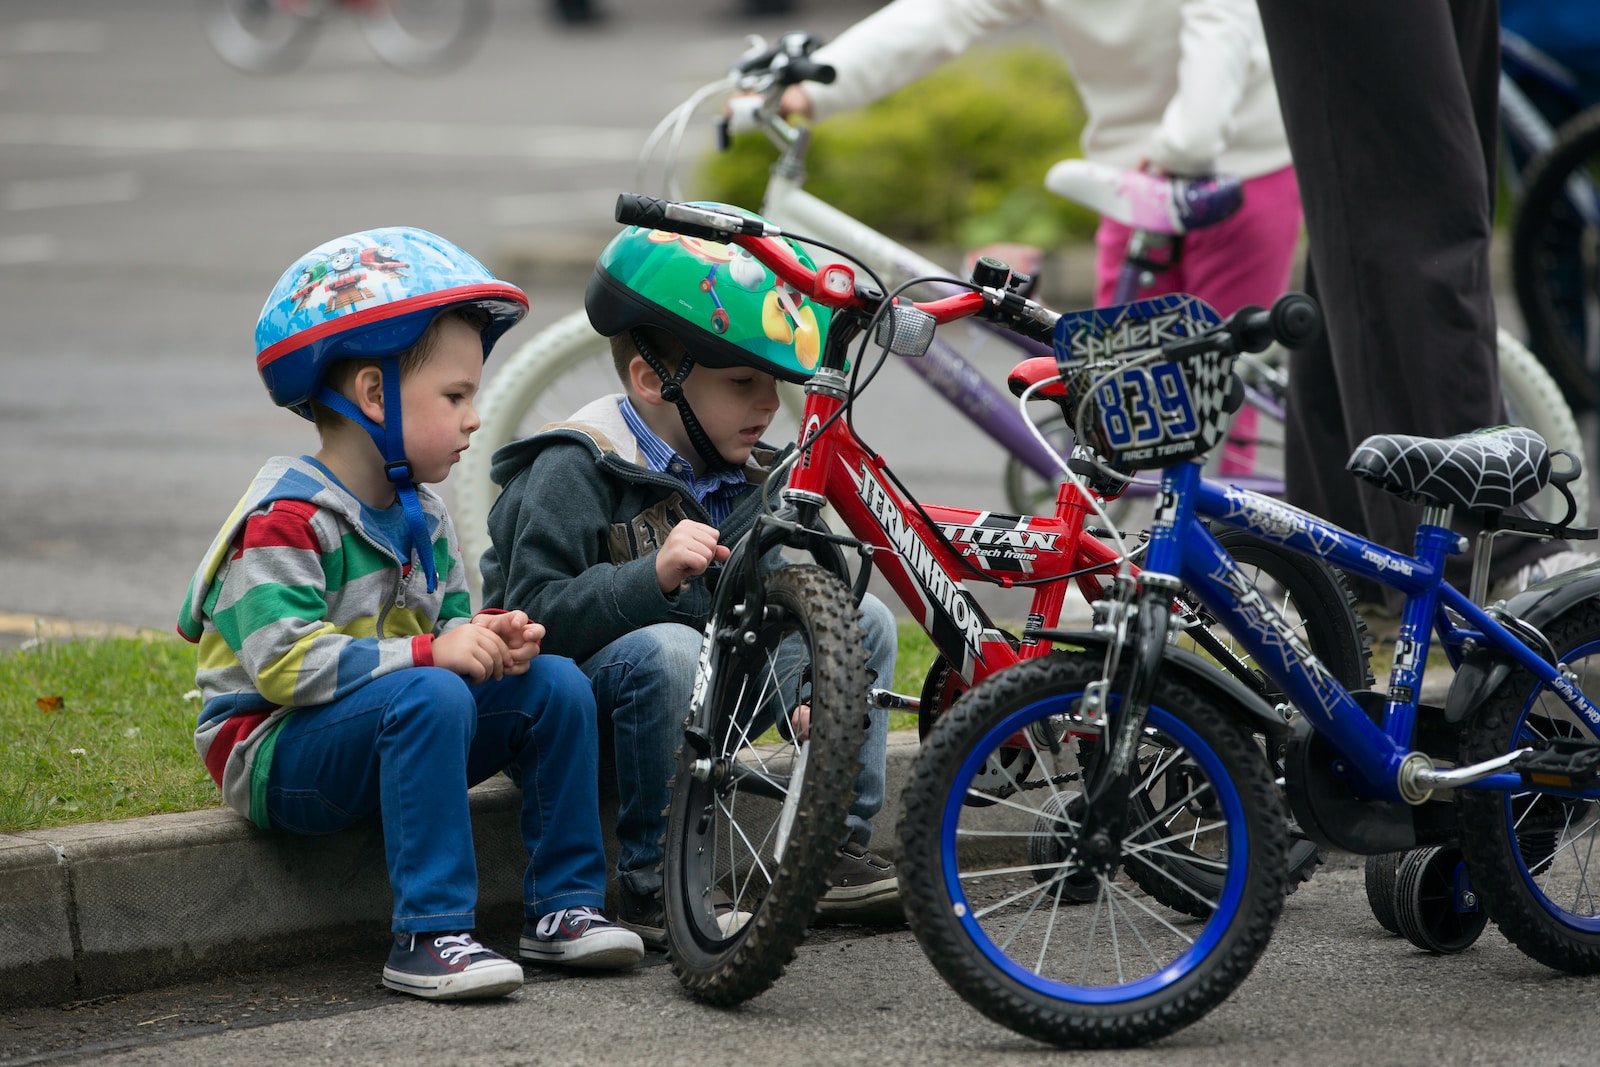 children riding on red mountain bike during daytime